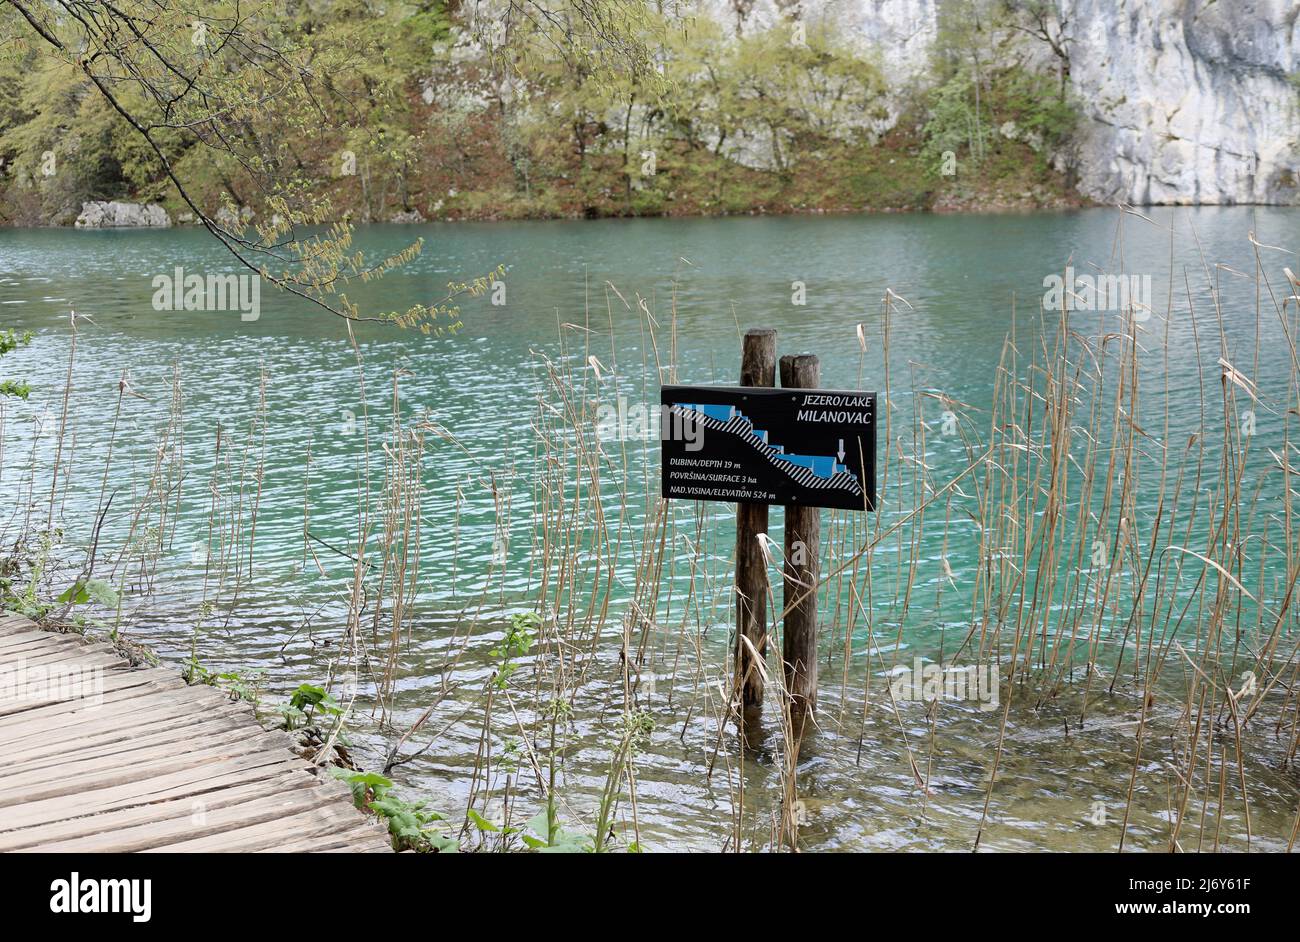 Milanovac Lake at Plitvice Lakes National Park in Croatia Stock Photo